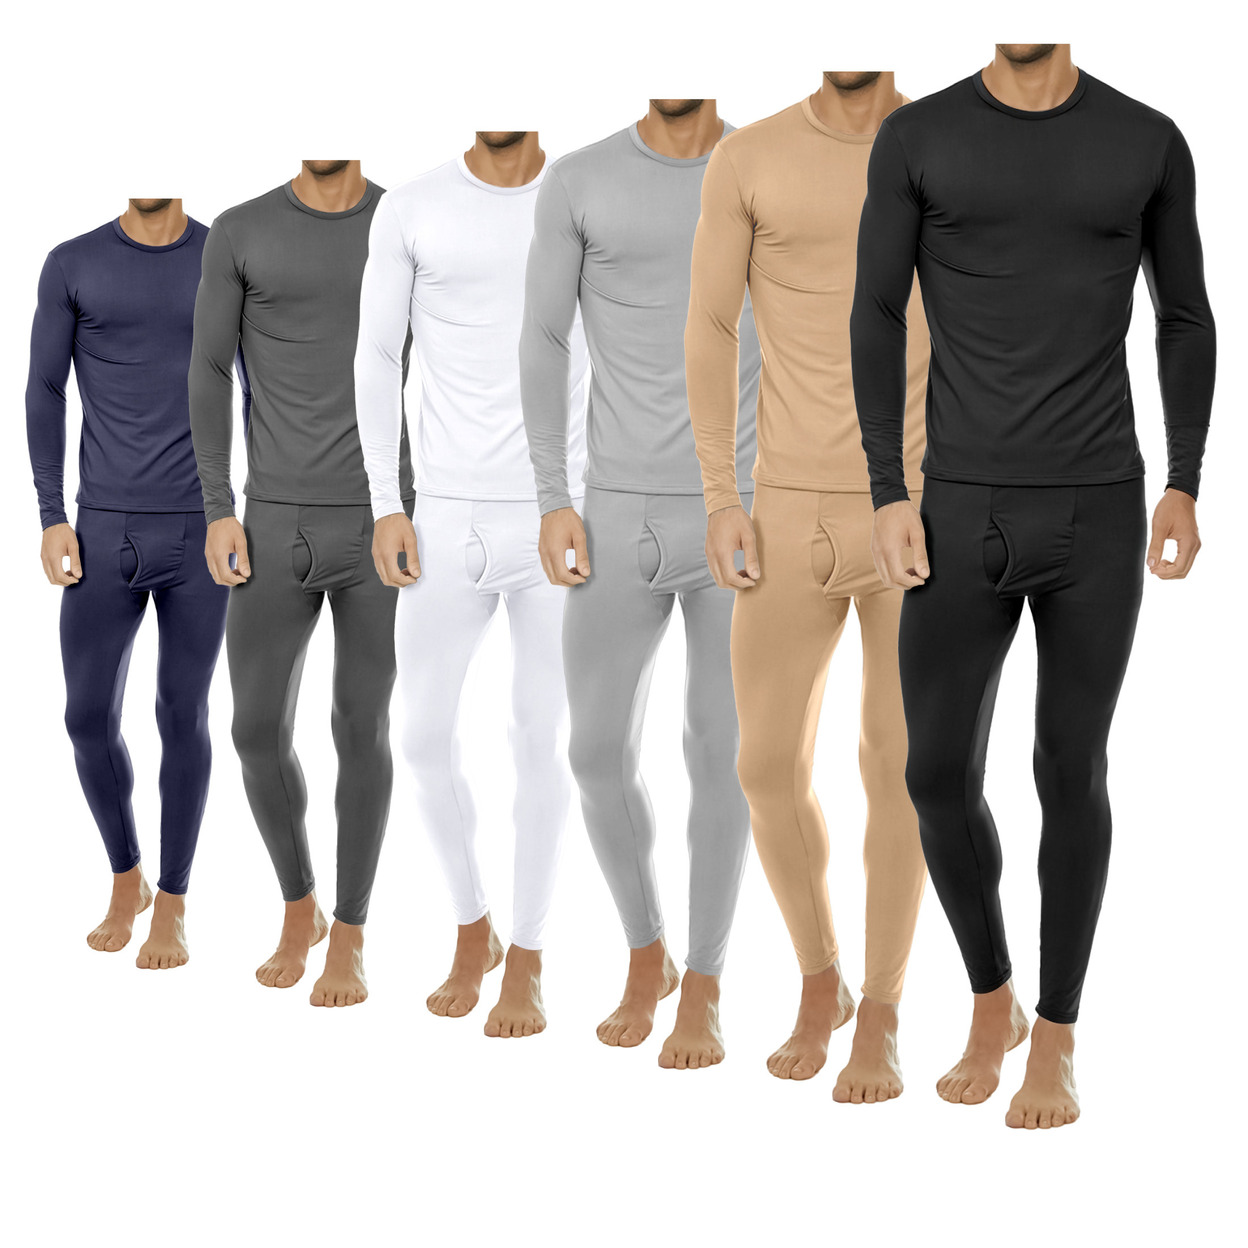 2-Sets: Men's Winter Warm Fleece Lined Thermal Underwear Set For Cold Weather - Black&black, X-large